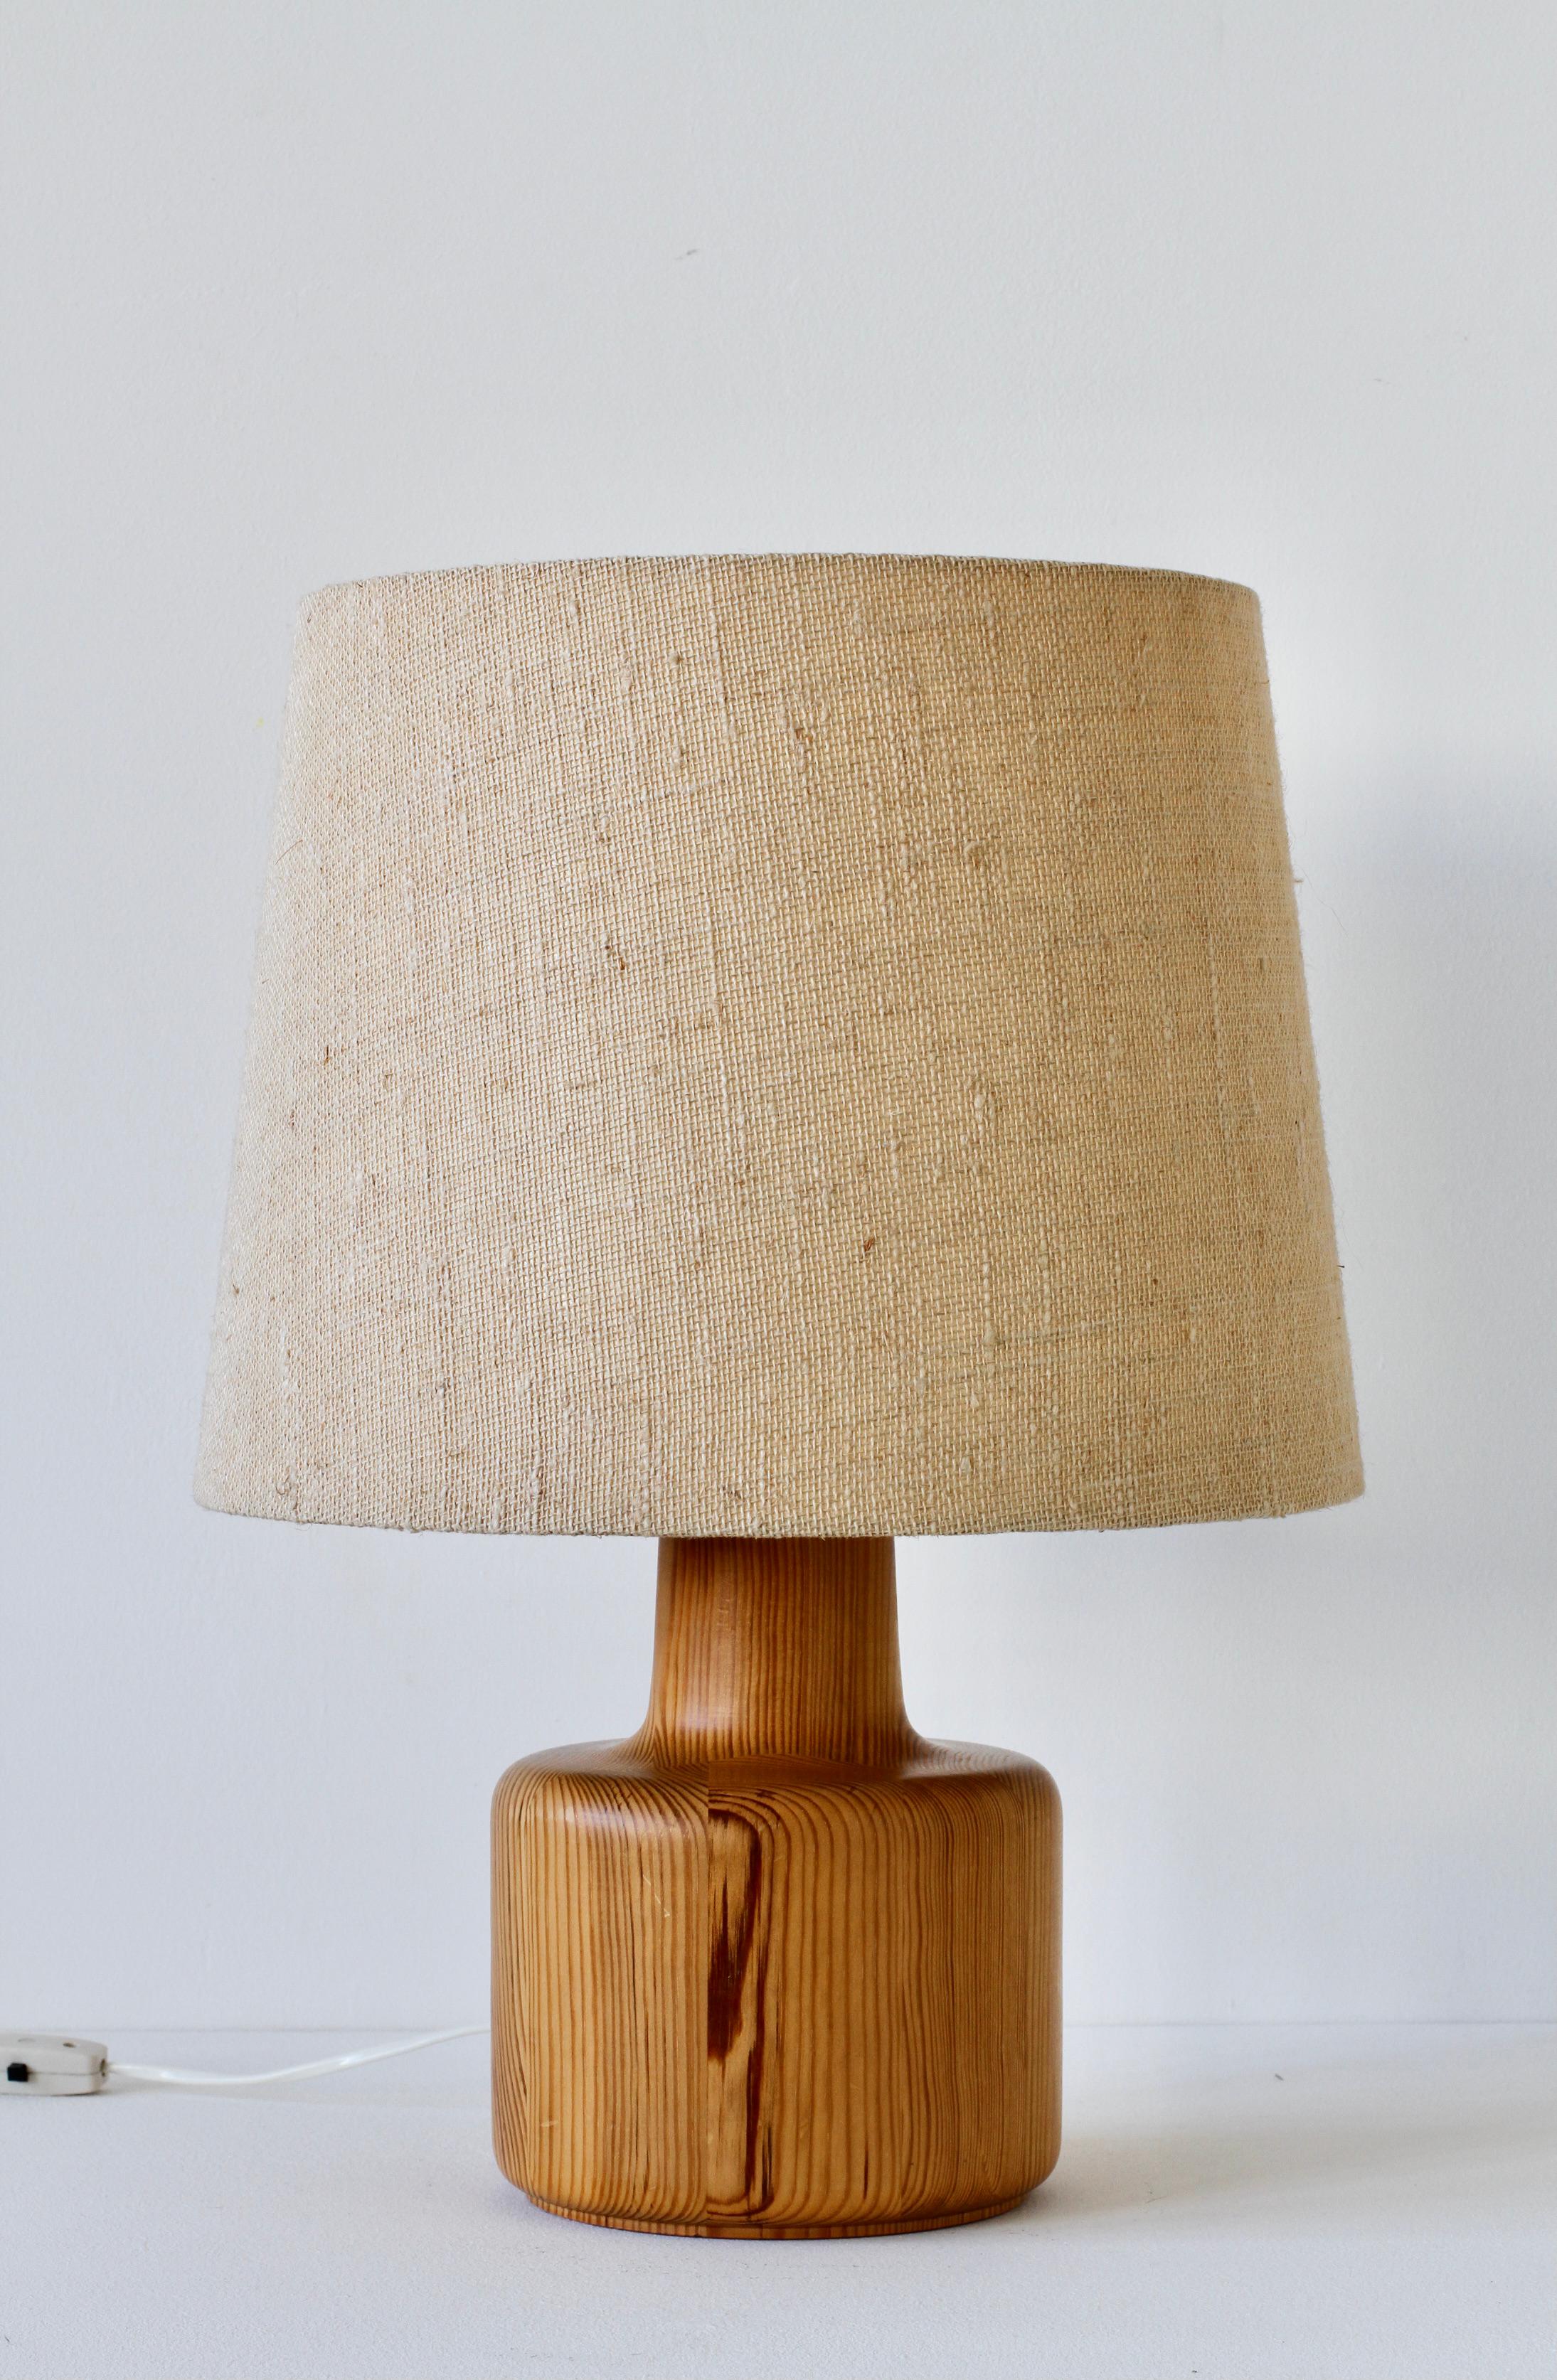 1970s Large Scandinavian Style Pine Wood Table Light Lamp Original Fabric Shade 2